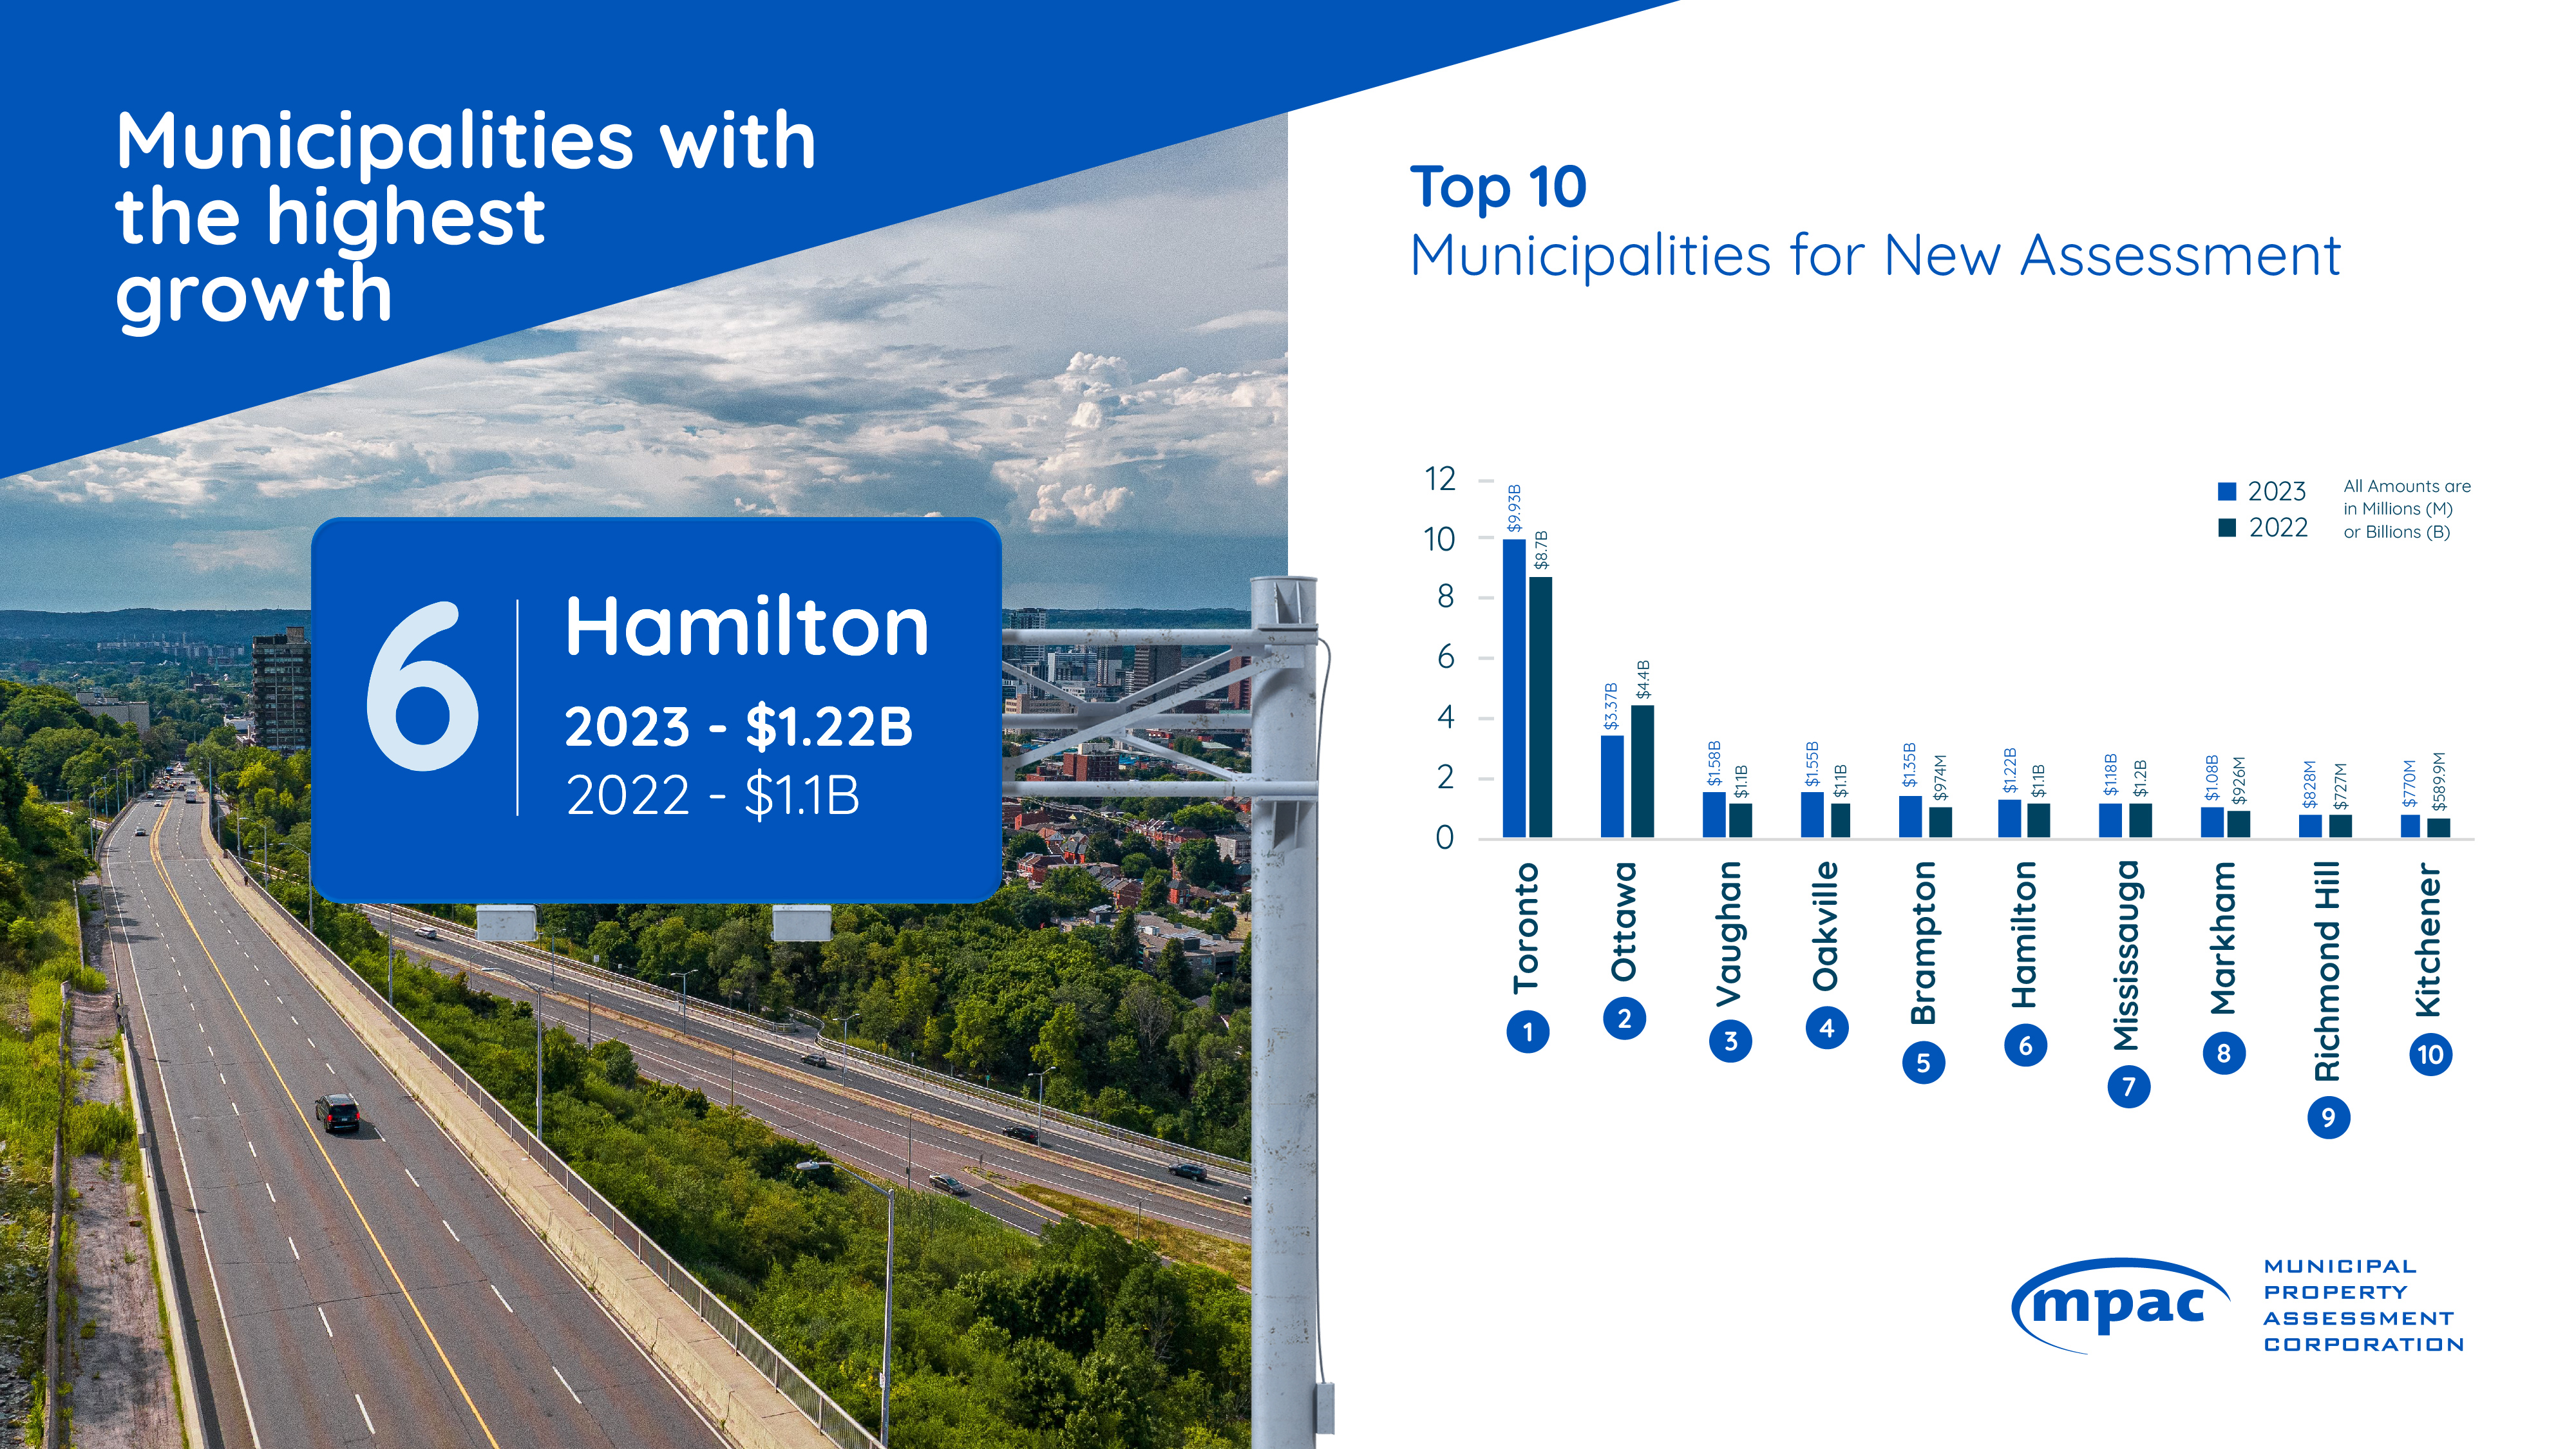 Top 10 Municipalities for New Assessment